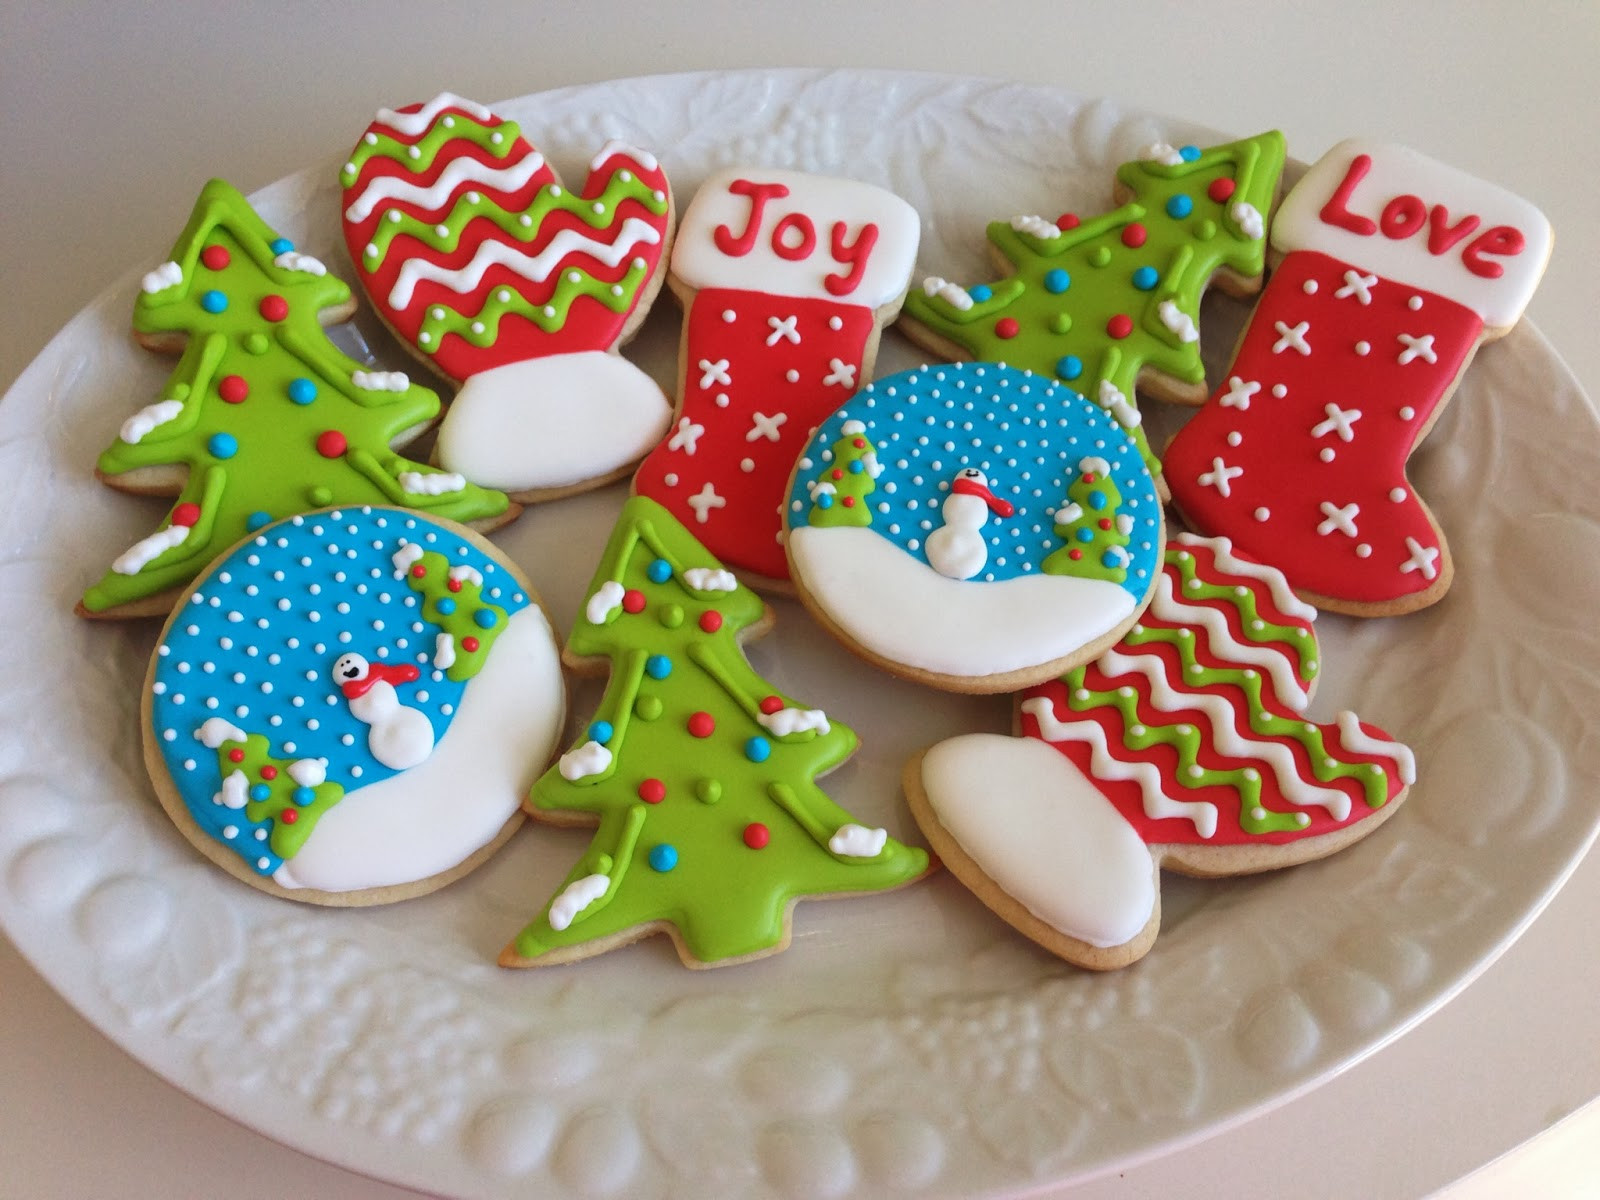 Christmas Sugar Cookies With Icing
 monograms & cake Christmas Cut Out Sugar Cookies with